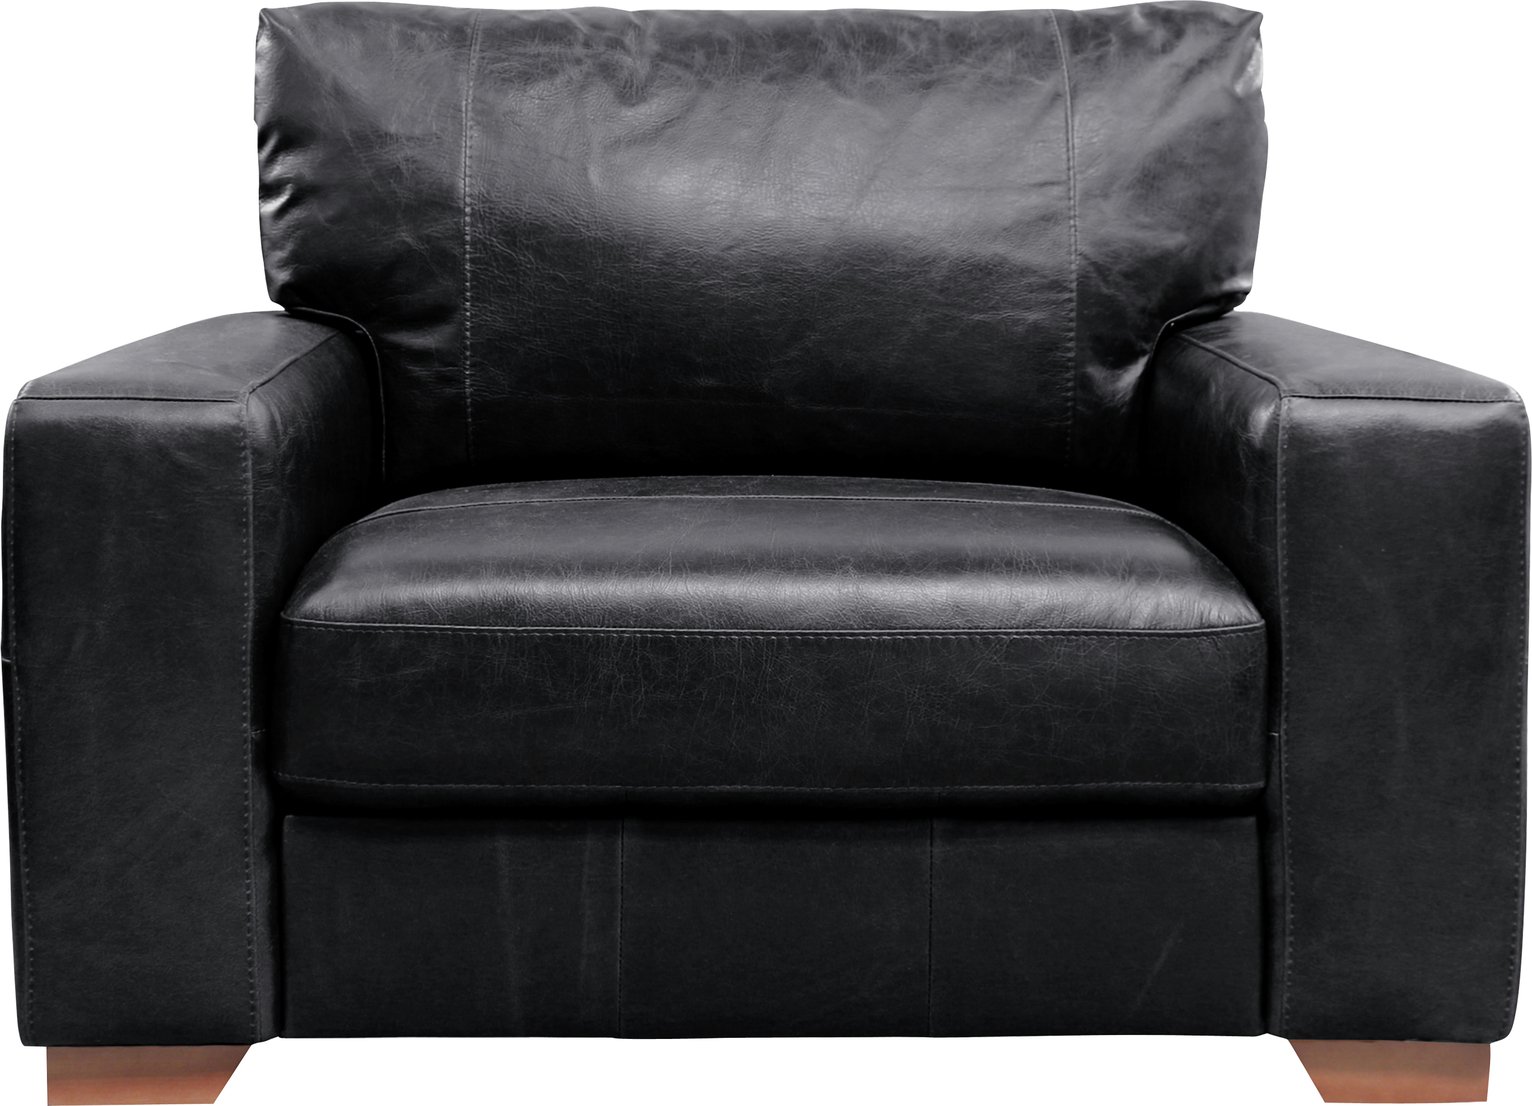 Argos Home Eton Leather Cuddle Chair - Black